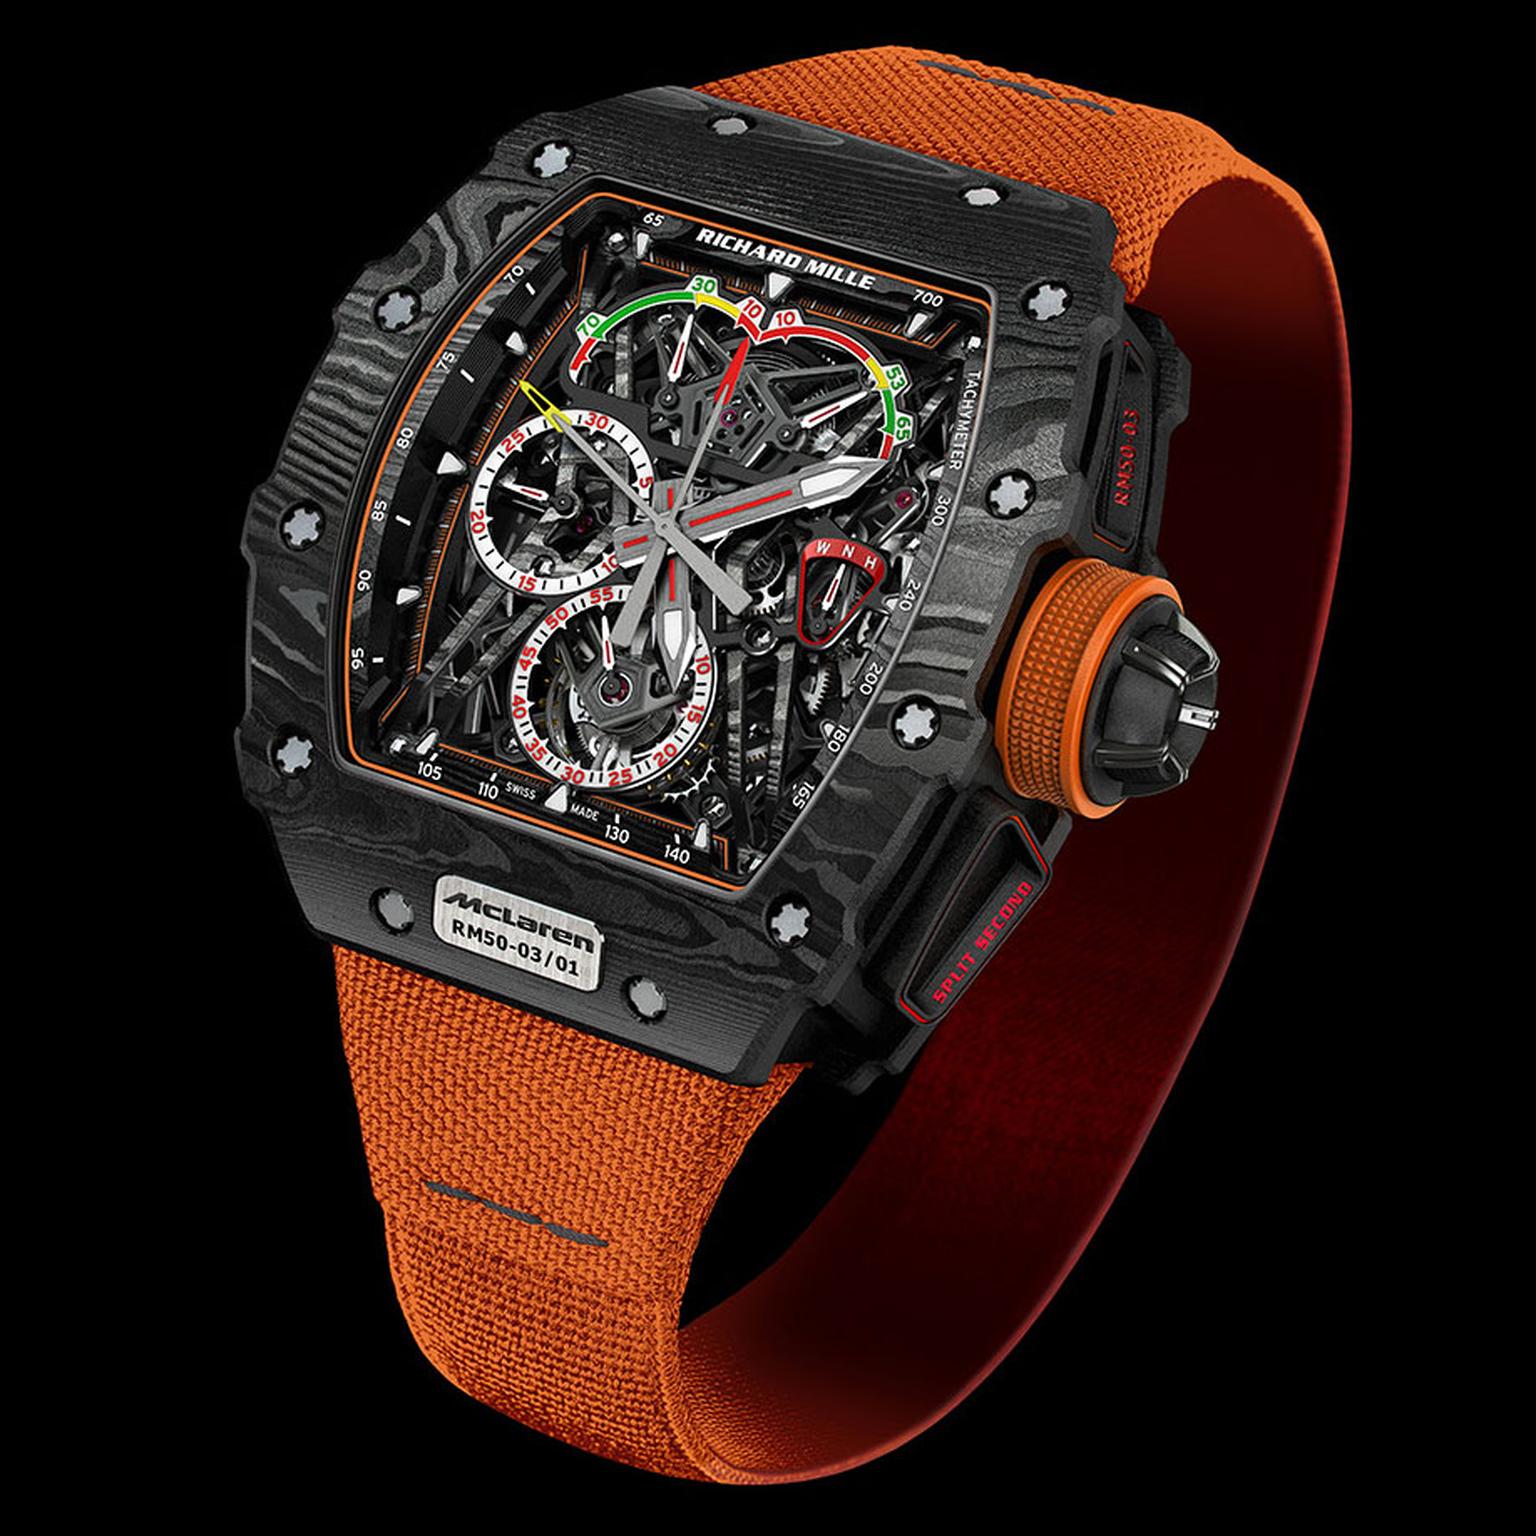 Richard Mille RM 50-03 McLaren F1 watch